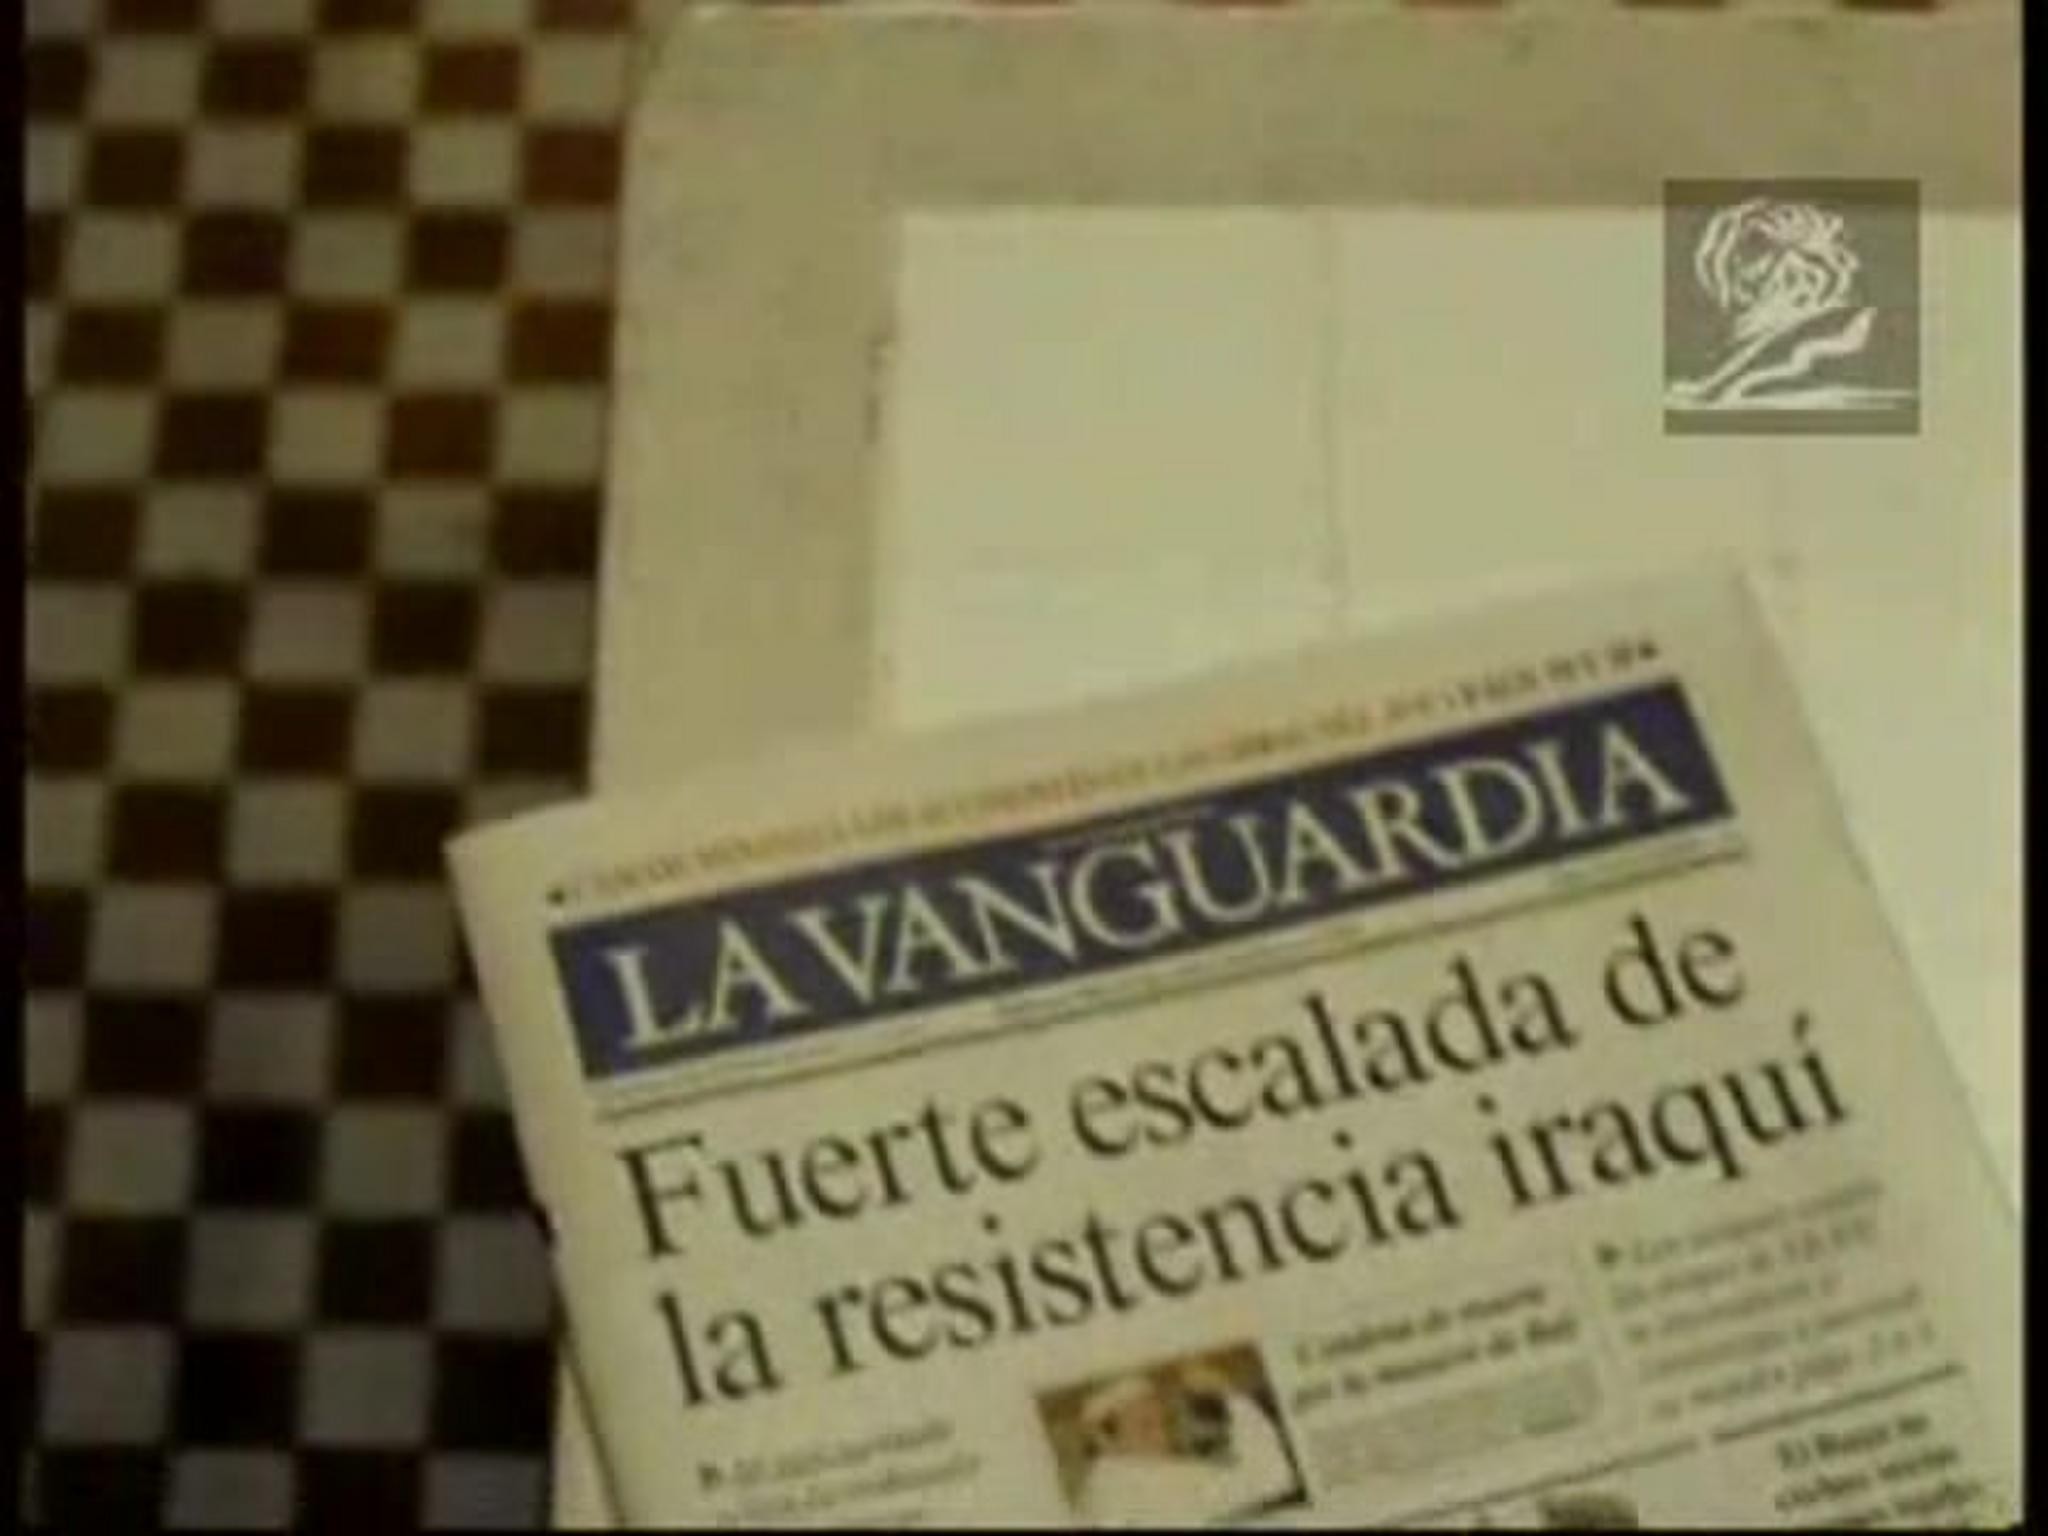 LA VANGUARDIA NEWS PAPER